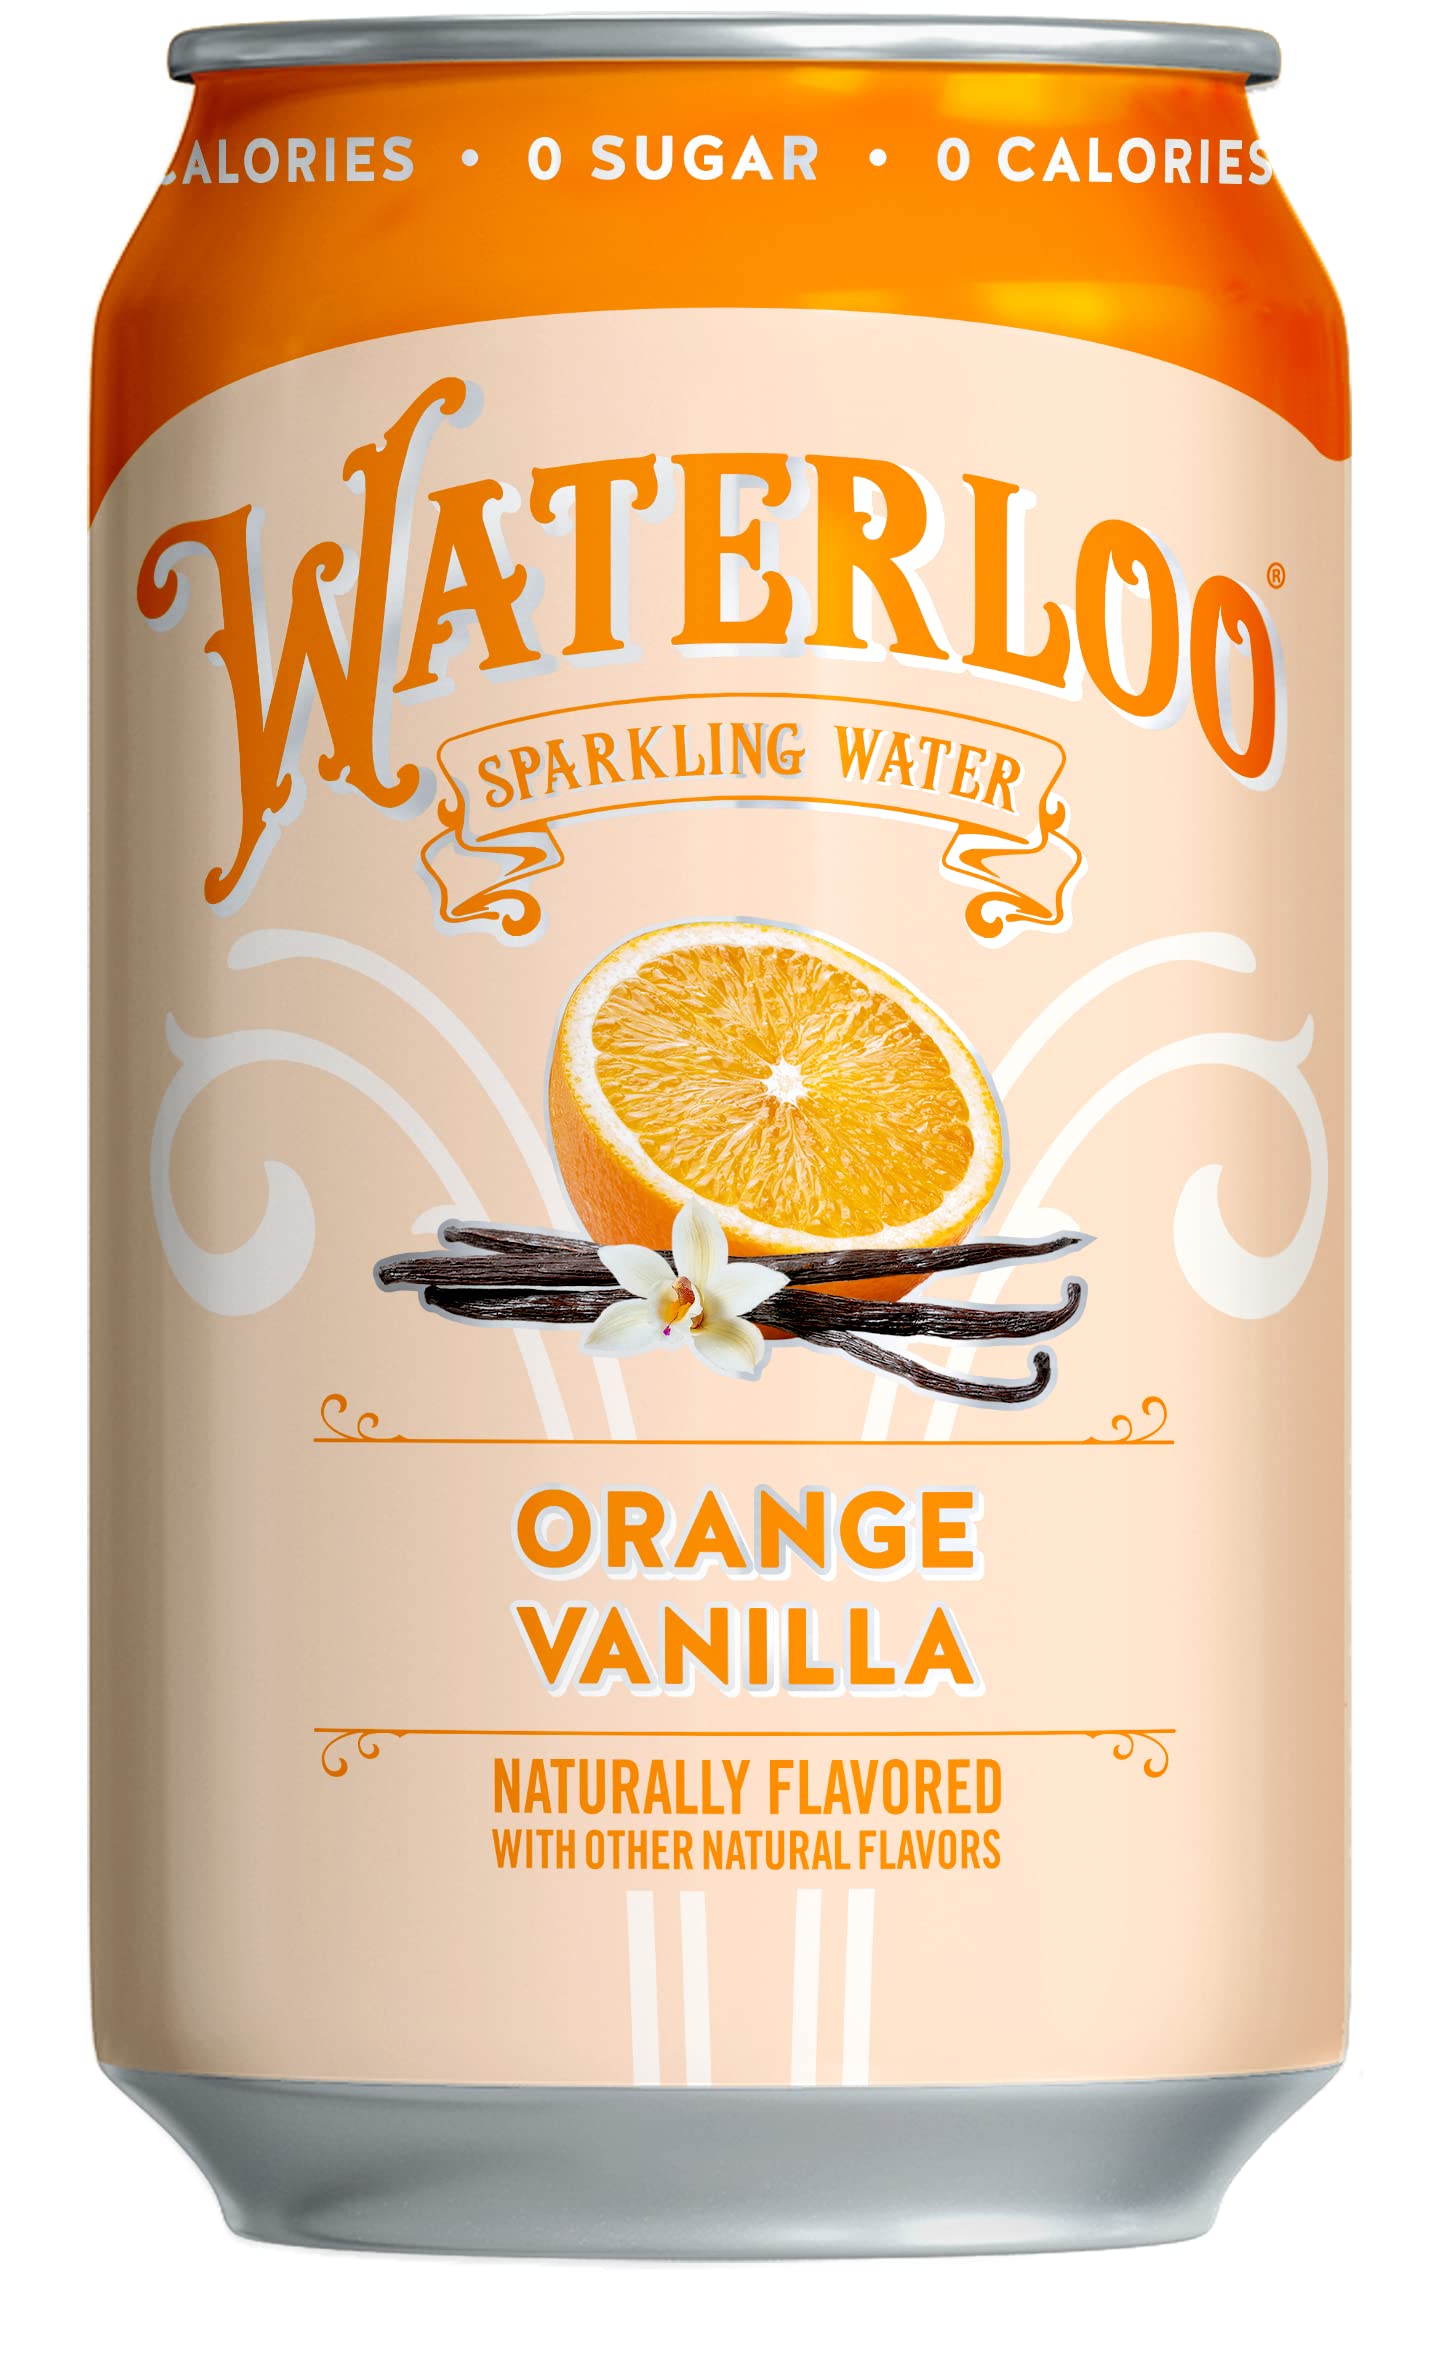 Waterloo Sparkling Water Orange Vanilla 12 Fl Oz Can